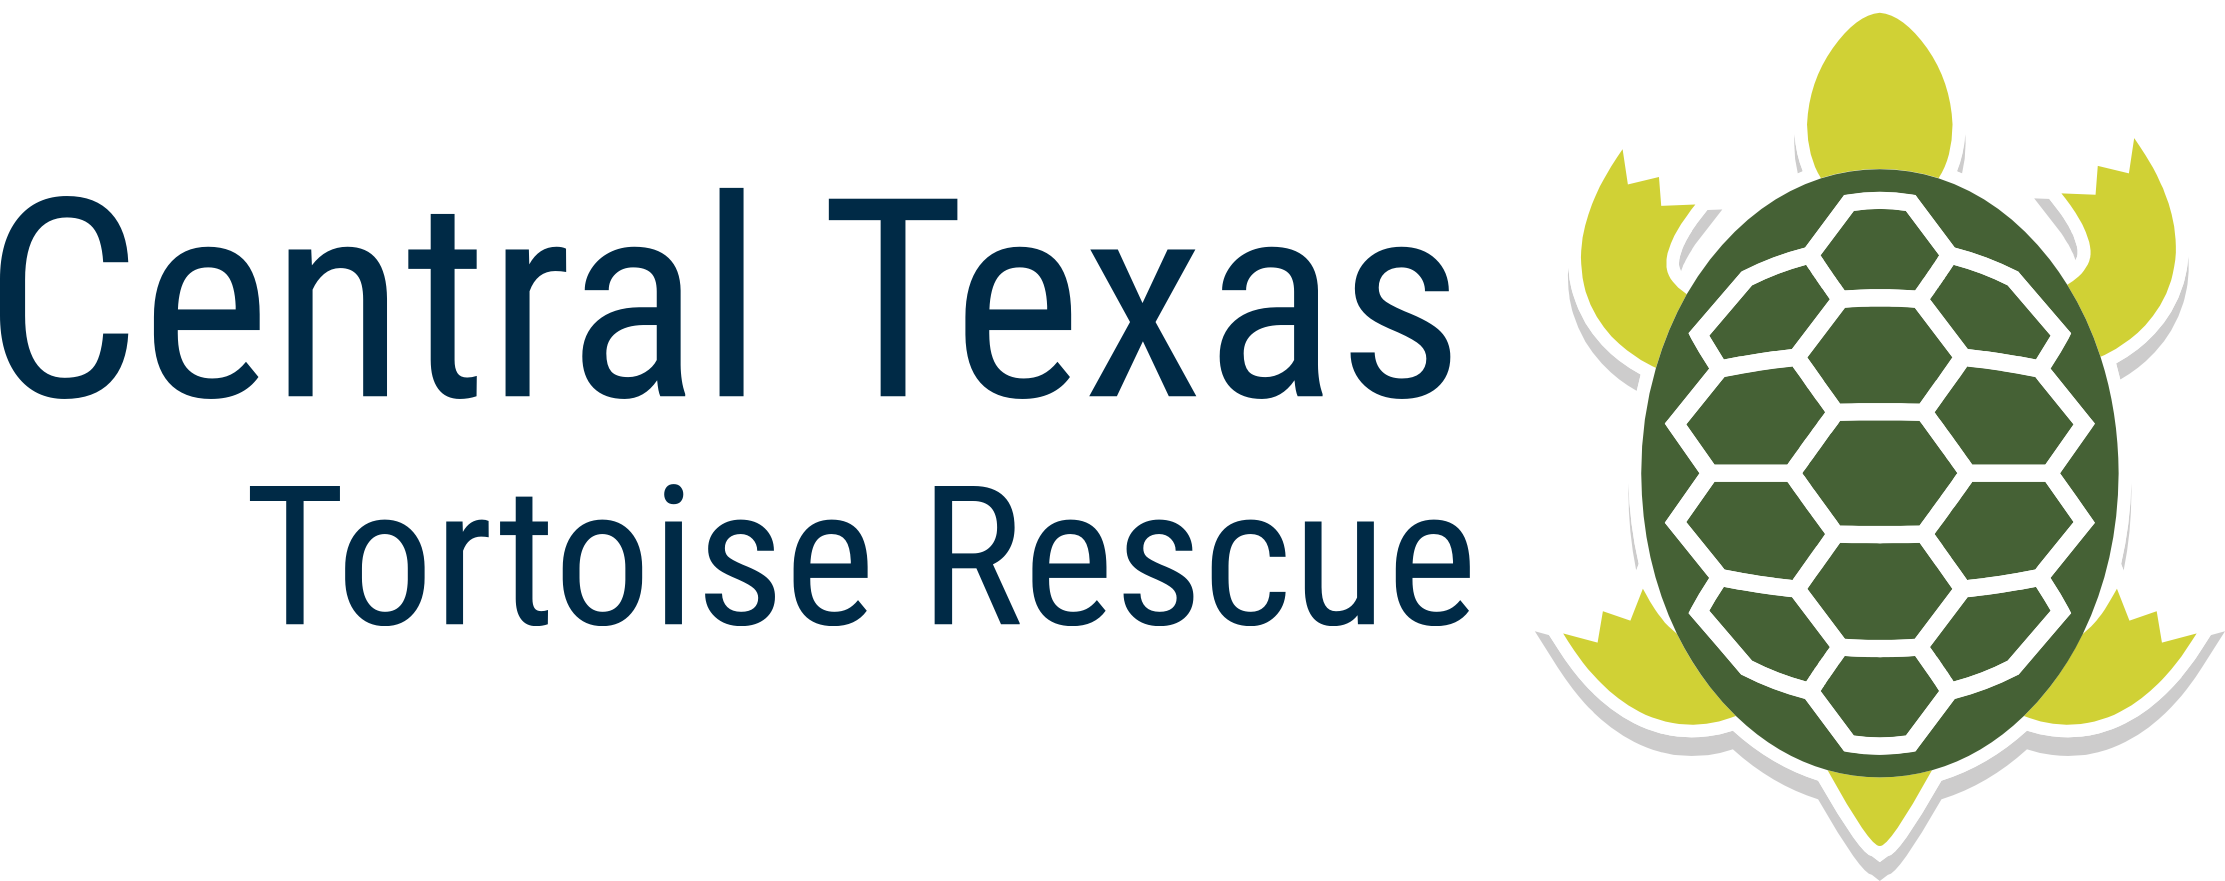 Central Texas Tortoise Rescue logo